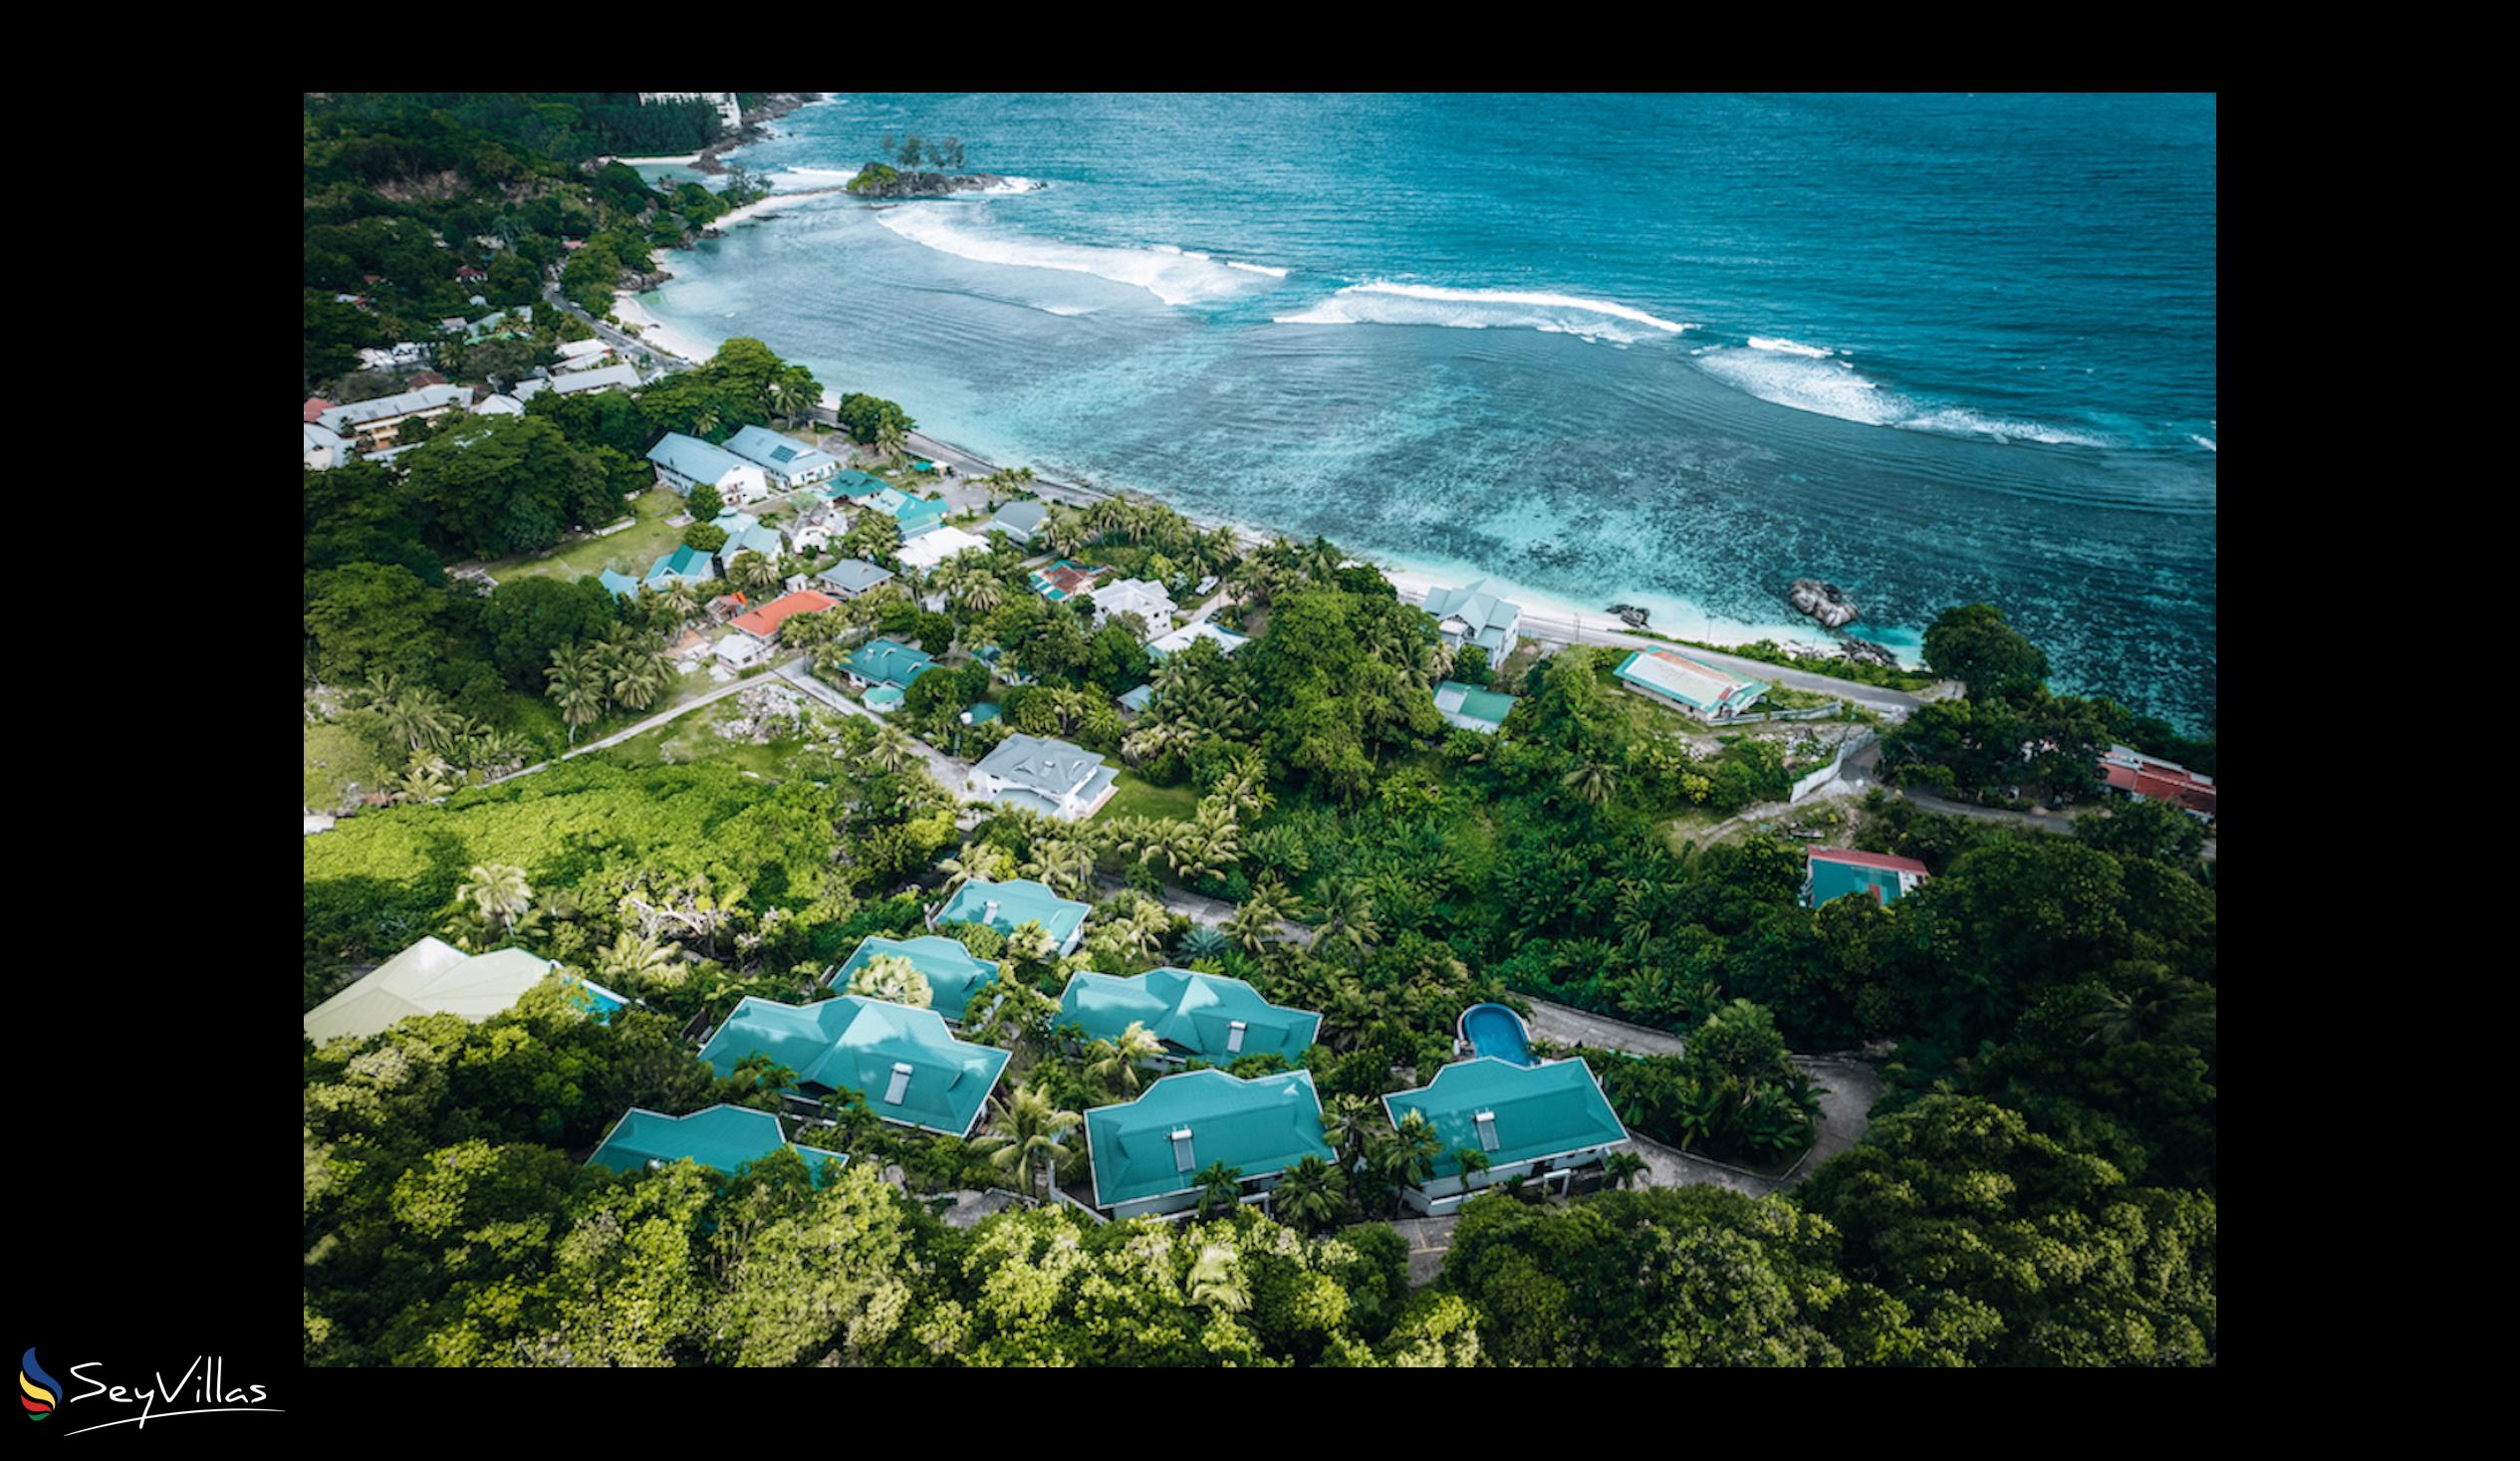 Photo 1: Villas de Jardin - Outdoor area - Mahé (Seychelles)